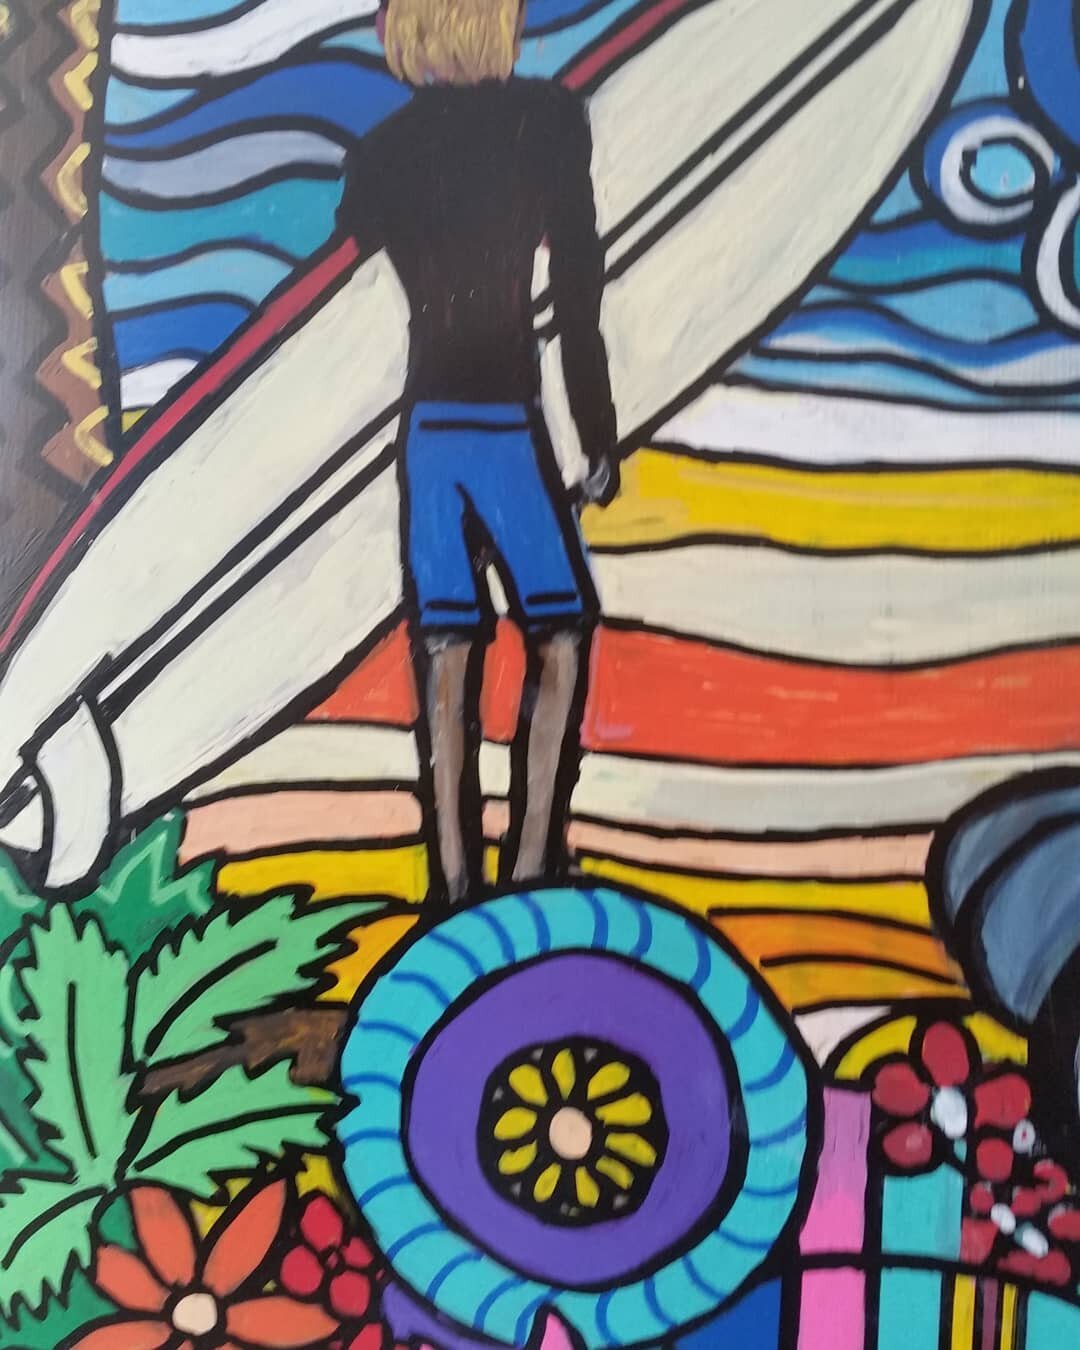 More close ups  of the surfboard  #surf #paintedsurfboard #surfartist #surfboards #surfers #posac #poscapens #madewithposca #mickfanning #oceanart